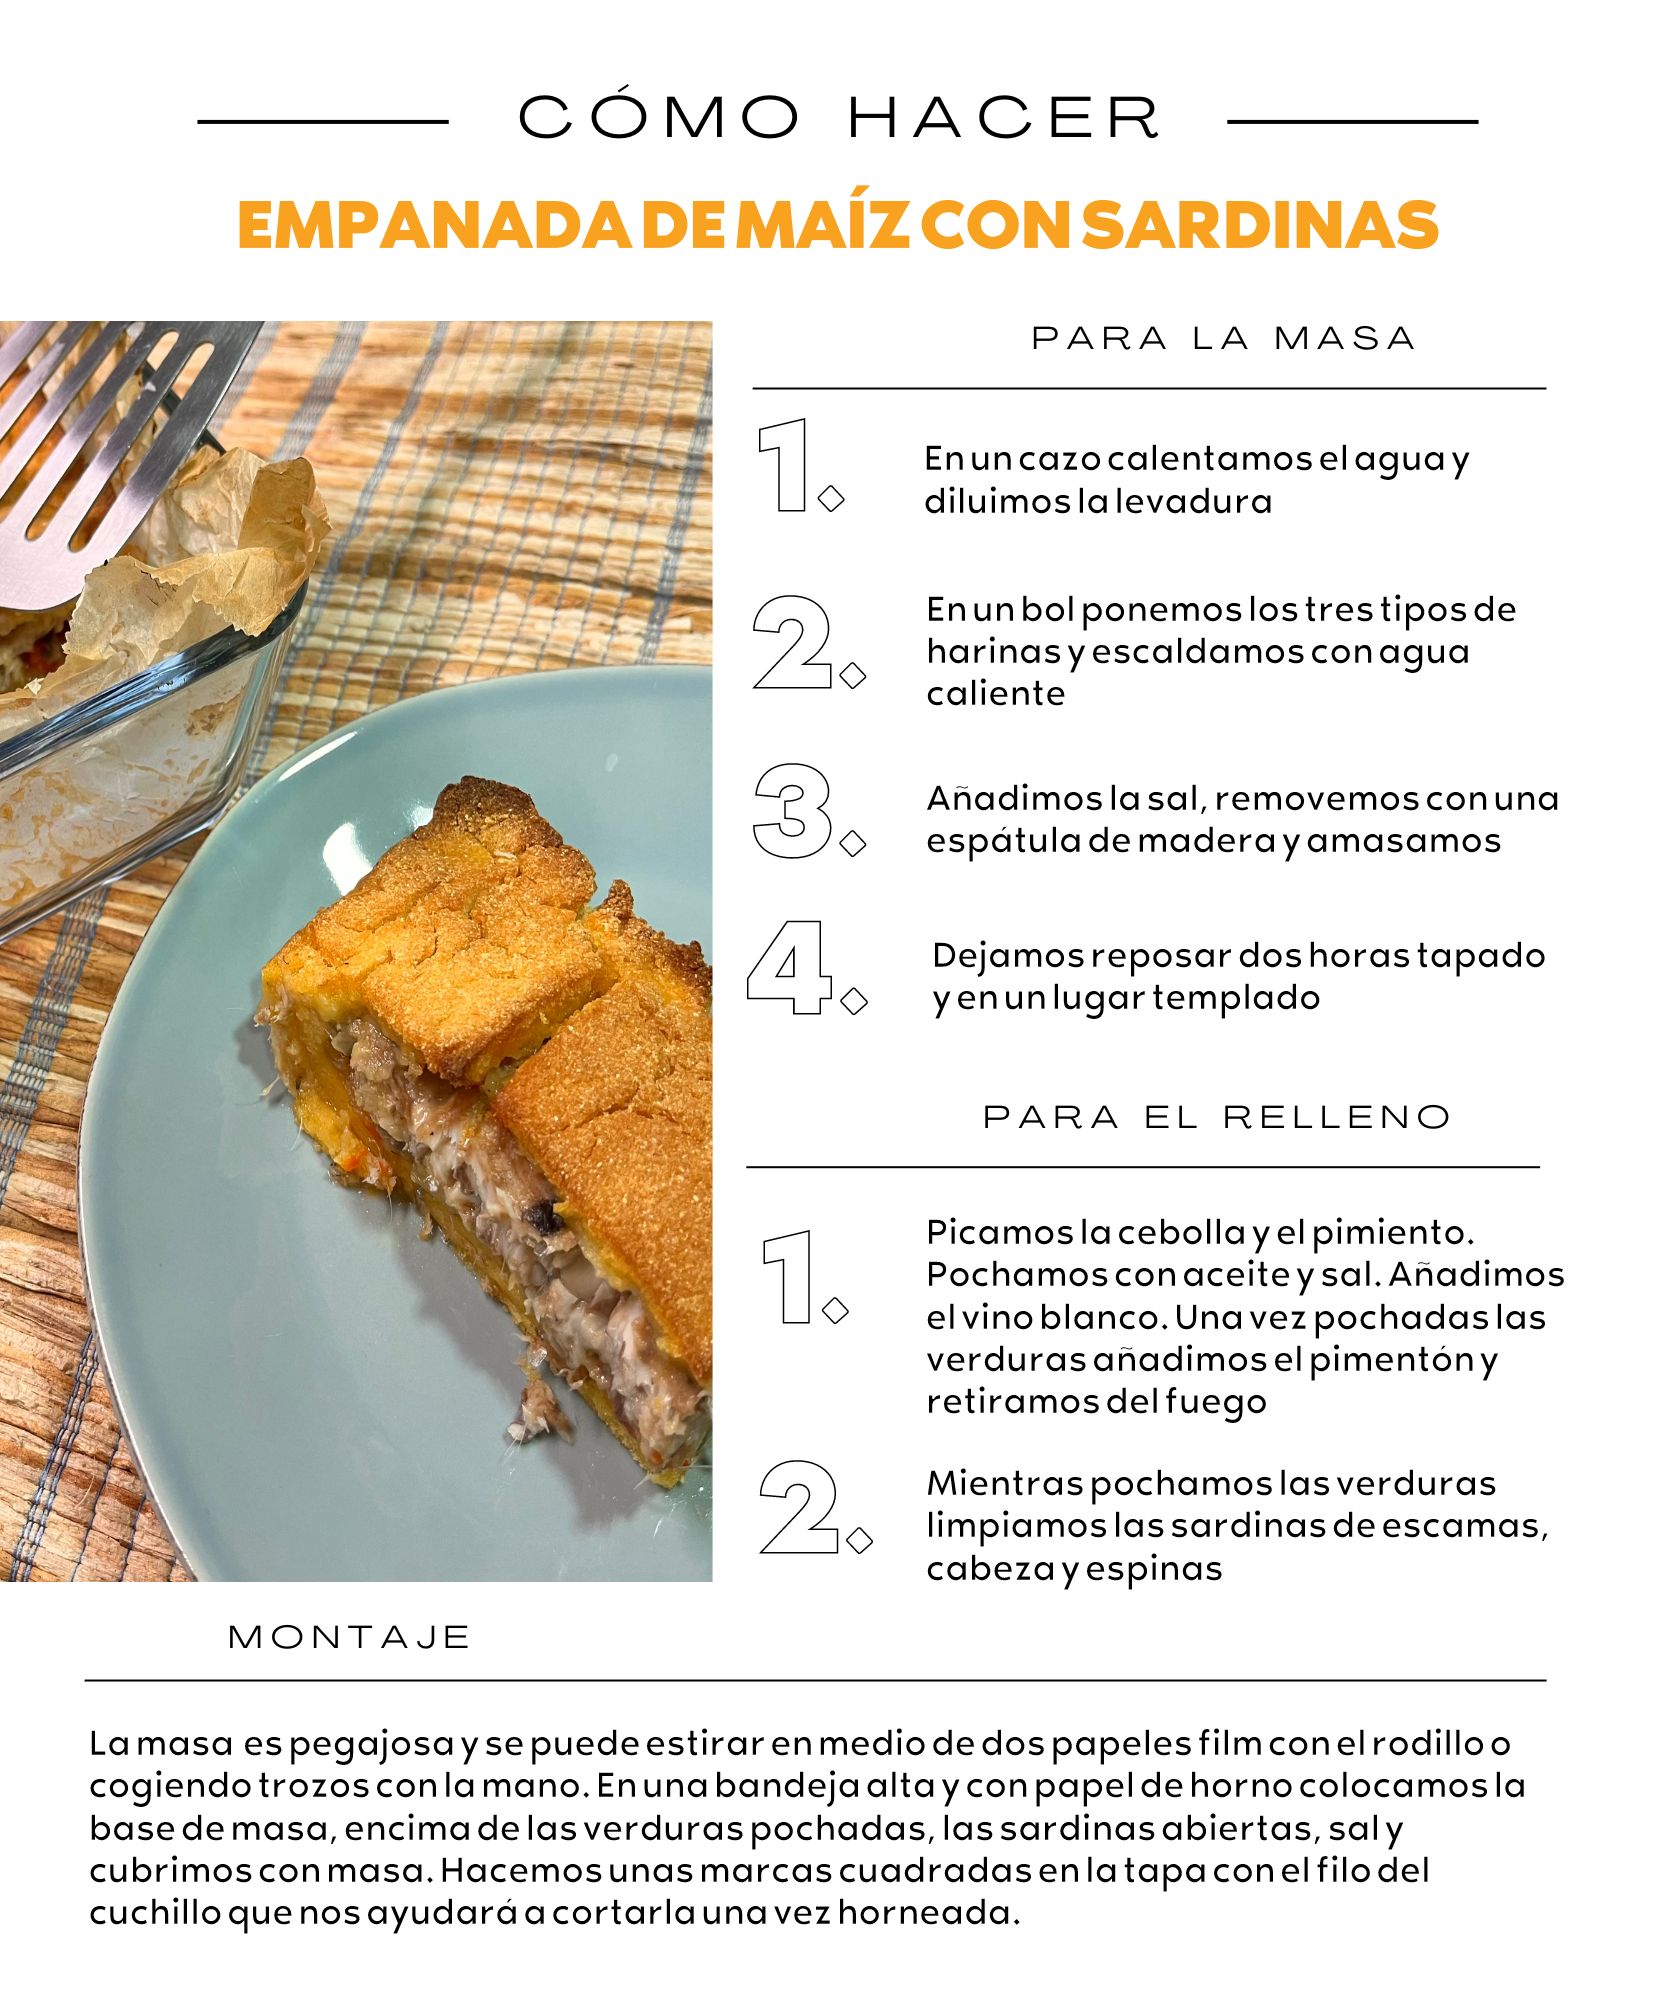 PASO A PASO de la receta empanada de maíz con sardinas